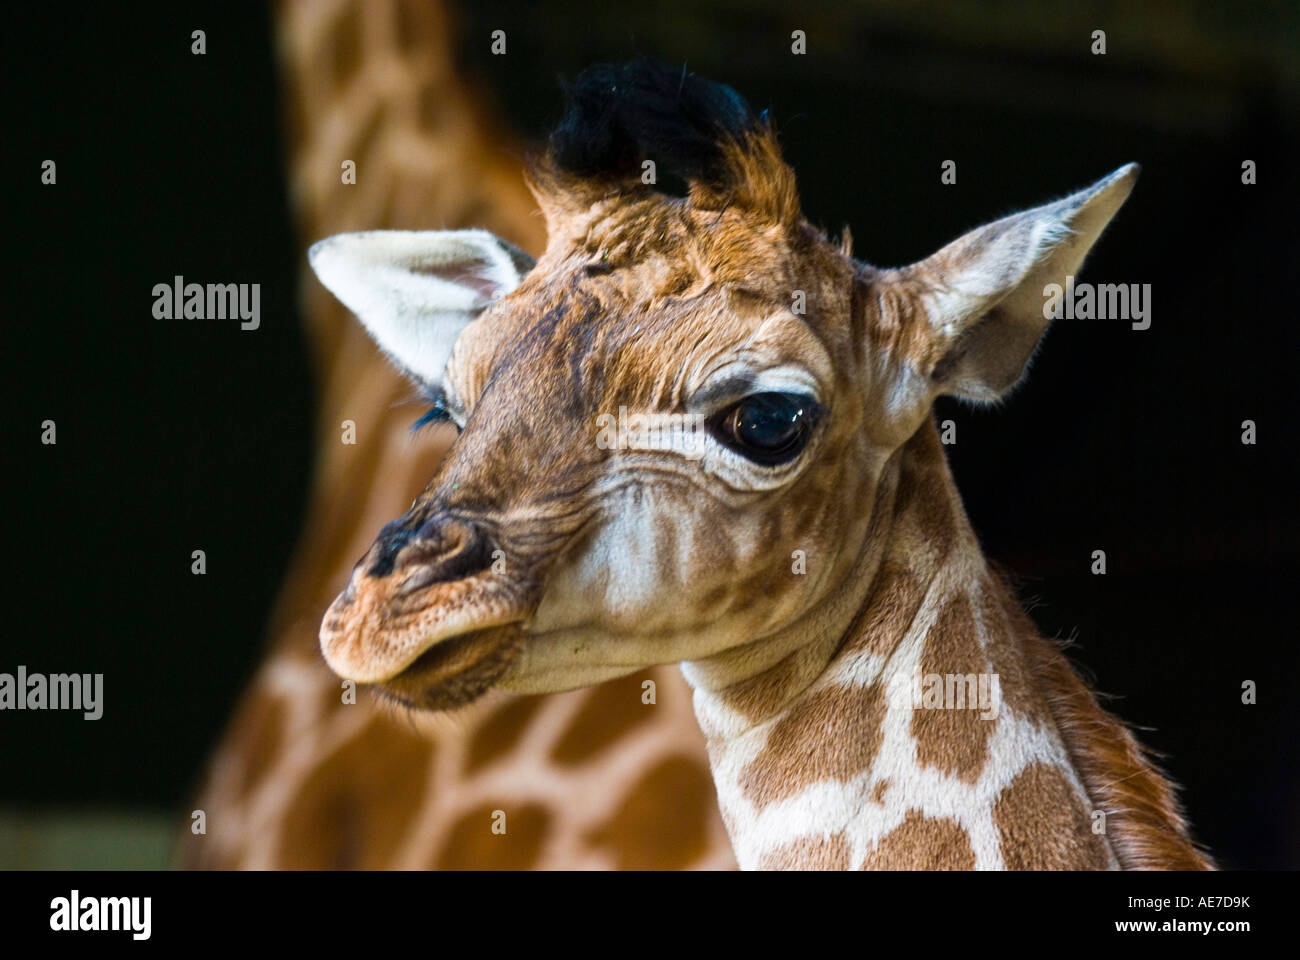 Baby orphan giraffe Stock Photo